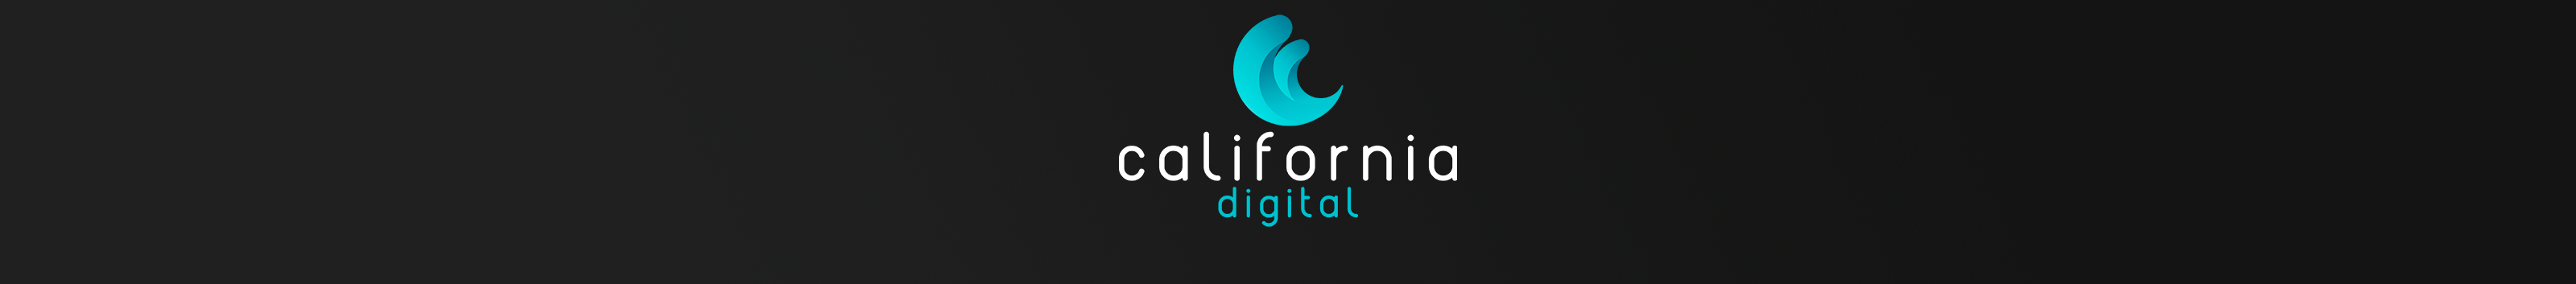 California Digitals profilbanner